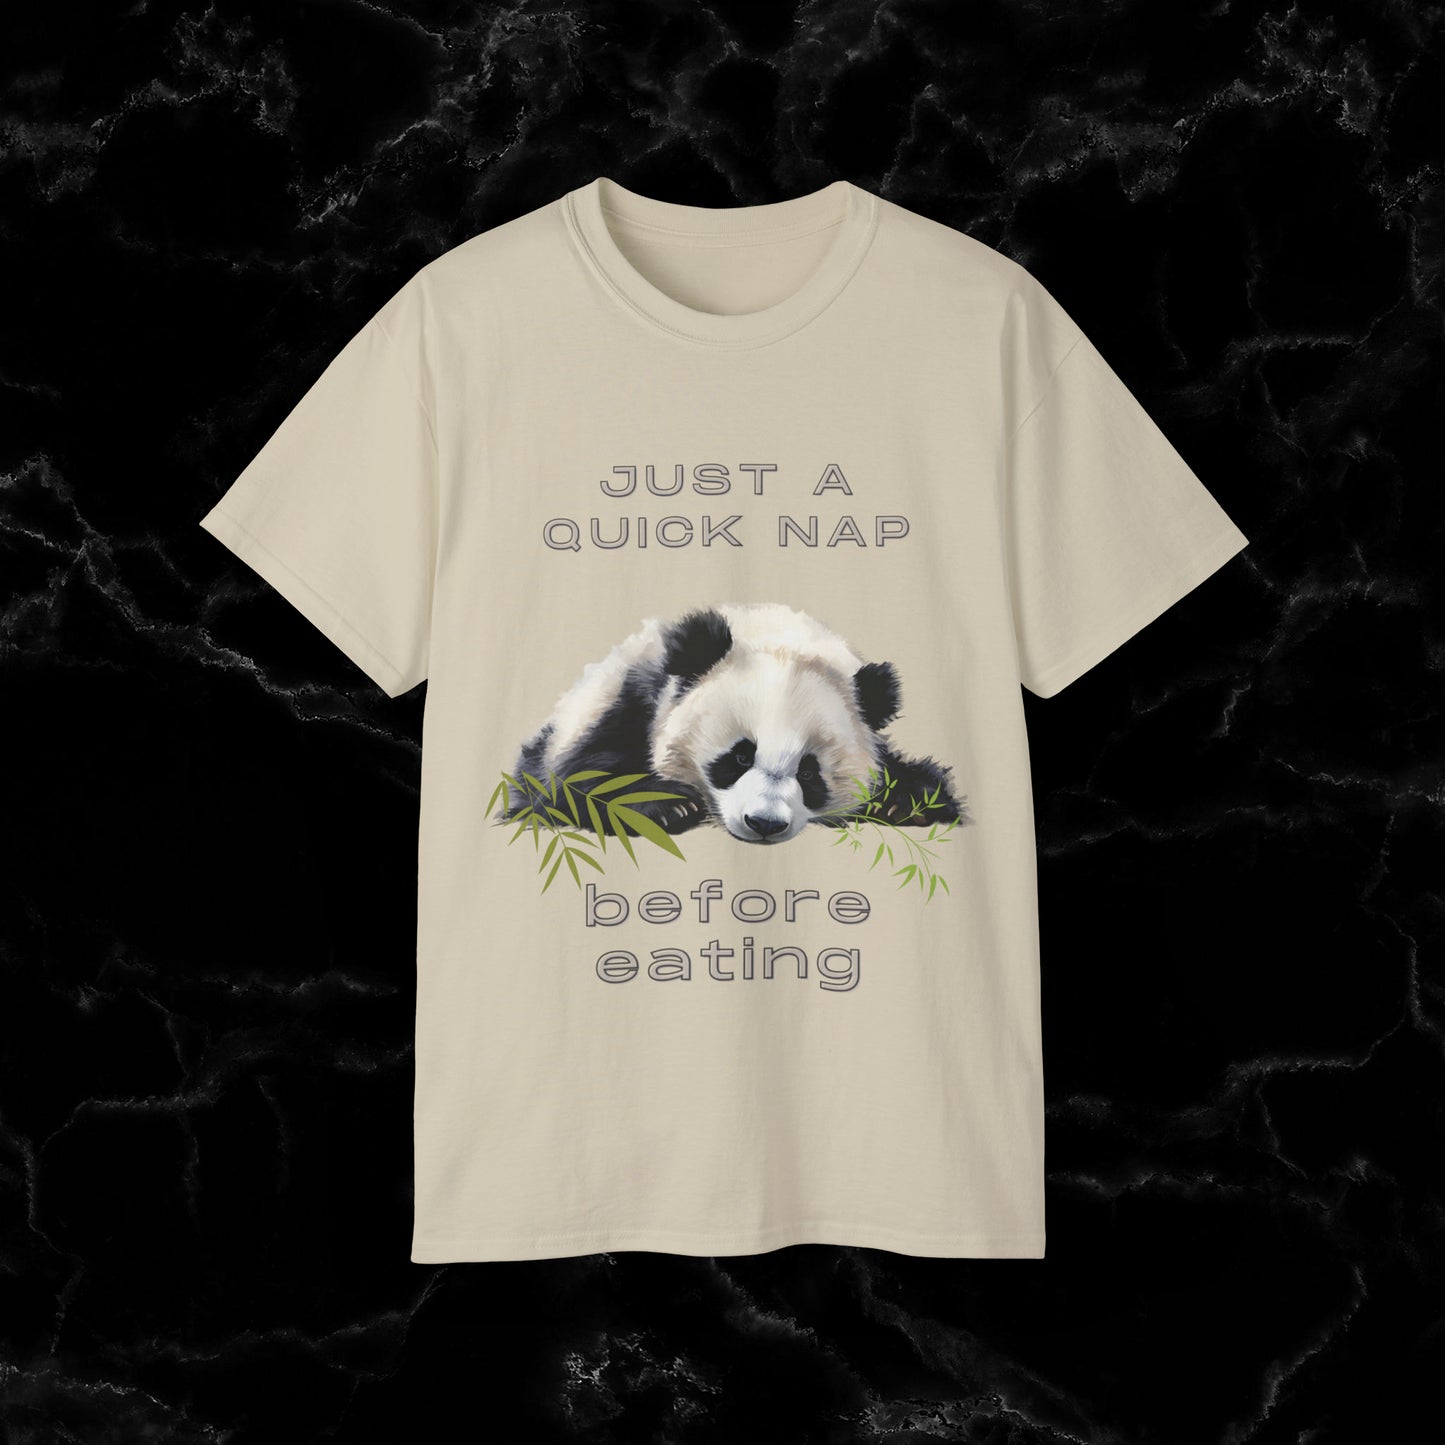 Nap Time Panda Unisex Funny Tee - Hilarious Panda Nap Design - Just a Quick Nap Before Eating T-Shirt Sand M 